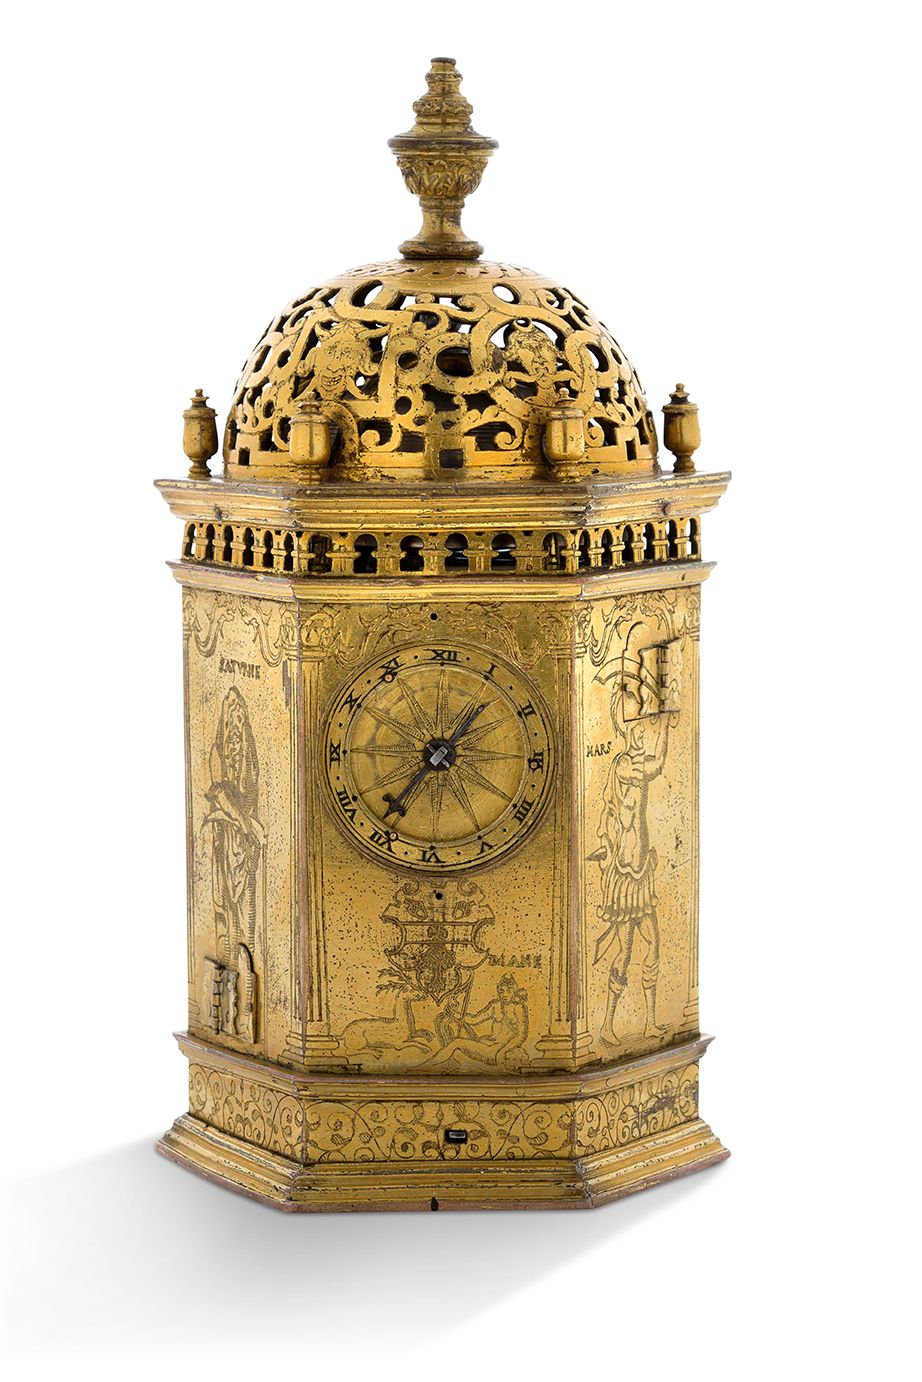 P. PLANTARD, Abbeville 
塔楼形式的台钟

鎏金铜，六边形，有一个穿孔的圆顶（用于铃铛）和雕刻的怪异面具。

在主面上，有一个圆形的表盘，&hellip;